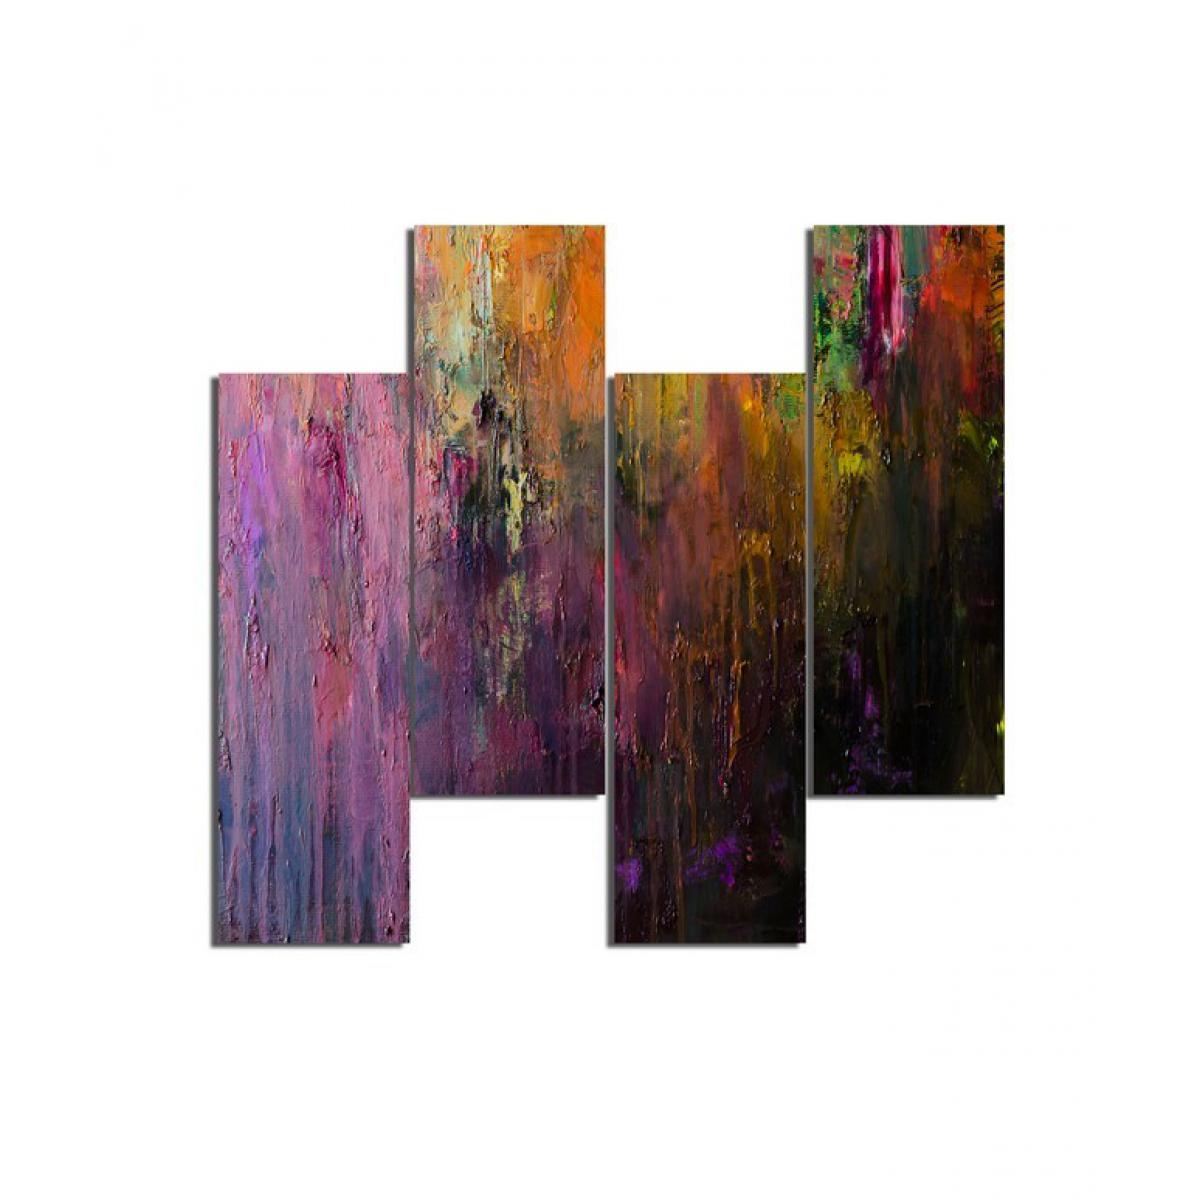 Homemania - HOMEMANIA Tableau Pluie - 4 Pieces - Abstract - from Living Room, Room - Multicouleur en MDF, 76 x 0,3 x 50 cm - Tableaux, peintures